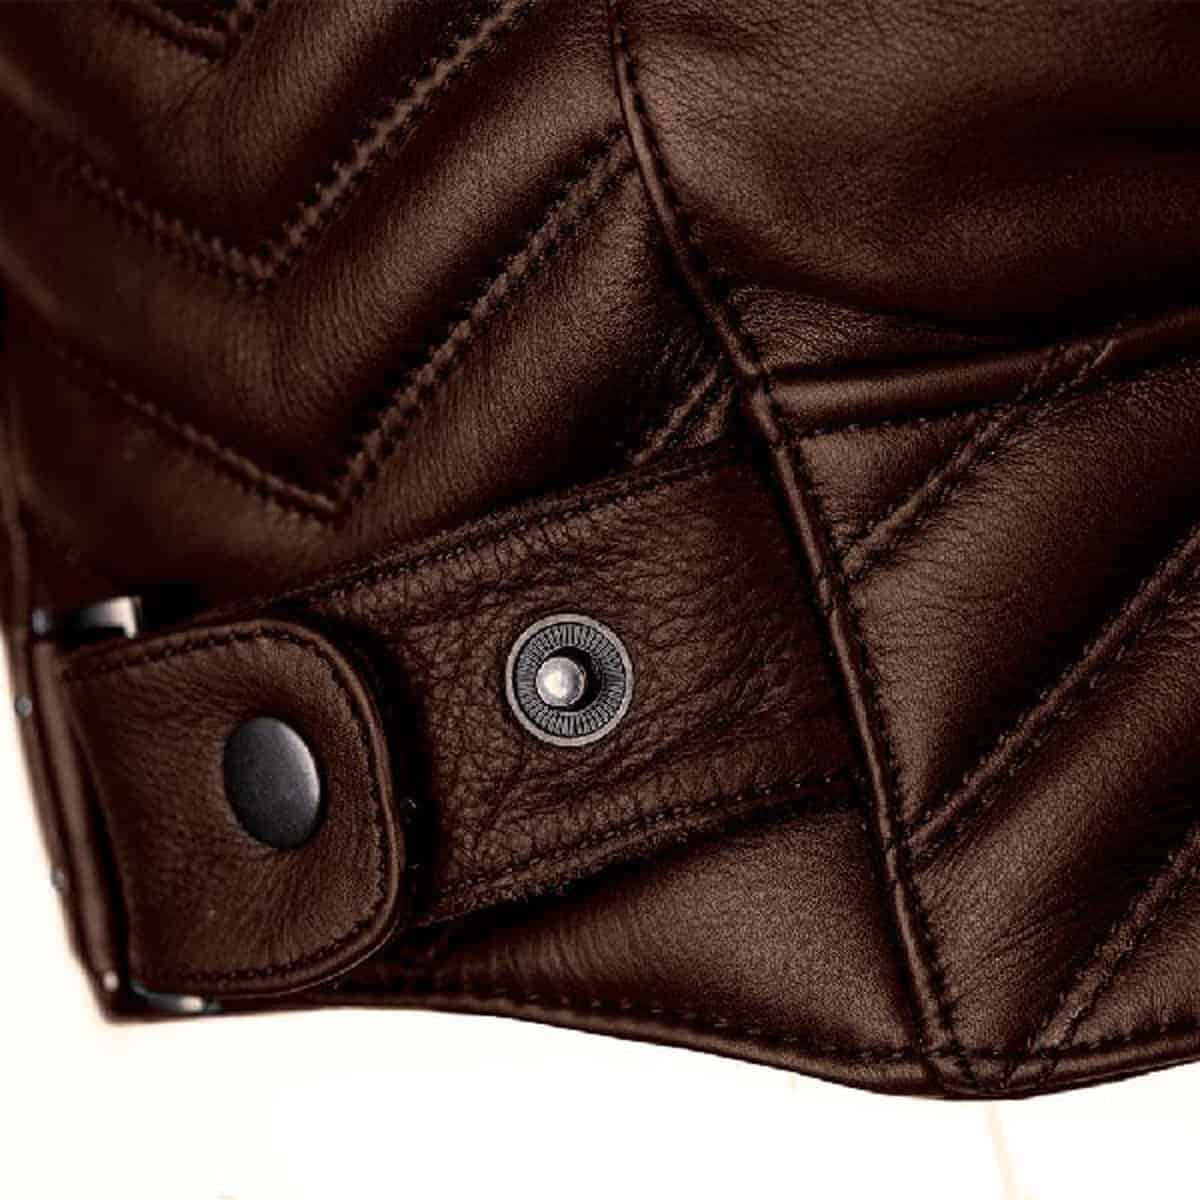 RST Roadster 3 leather motorcycle jacket brown waist adjusters